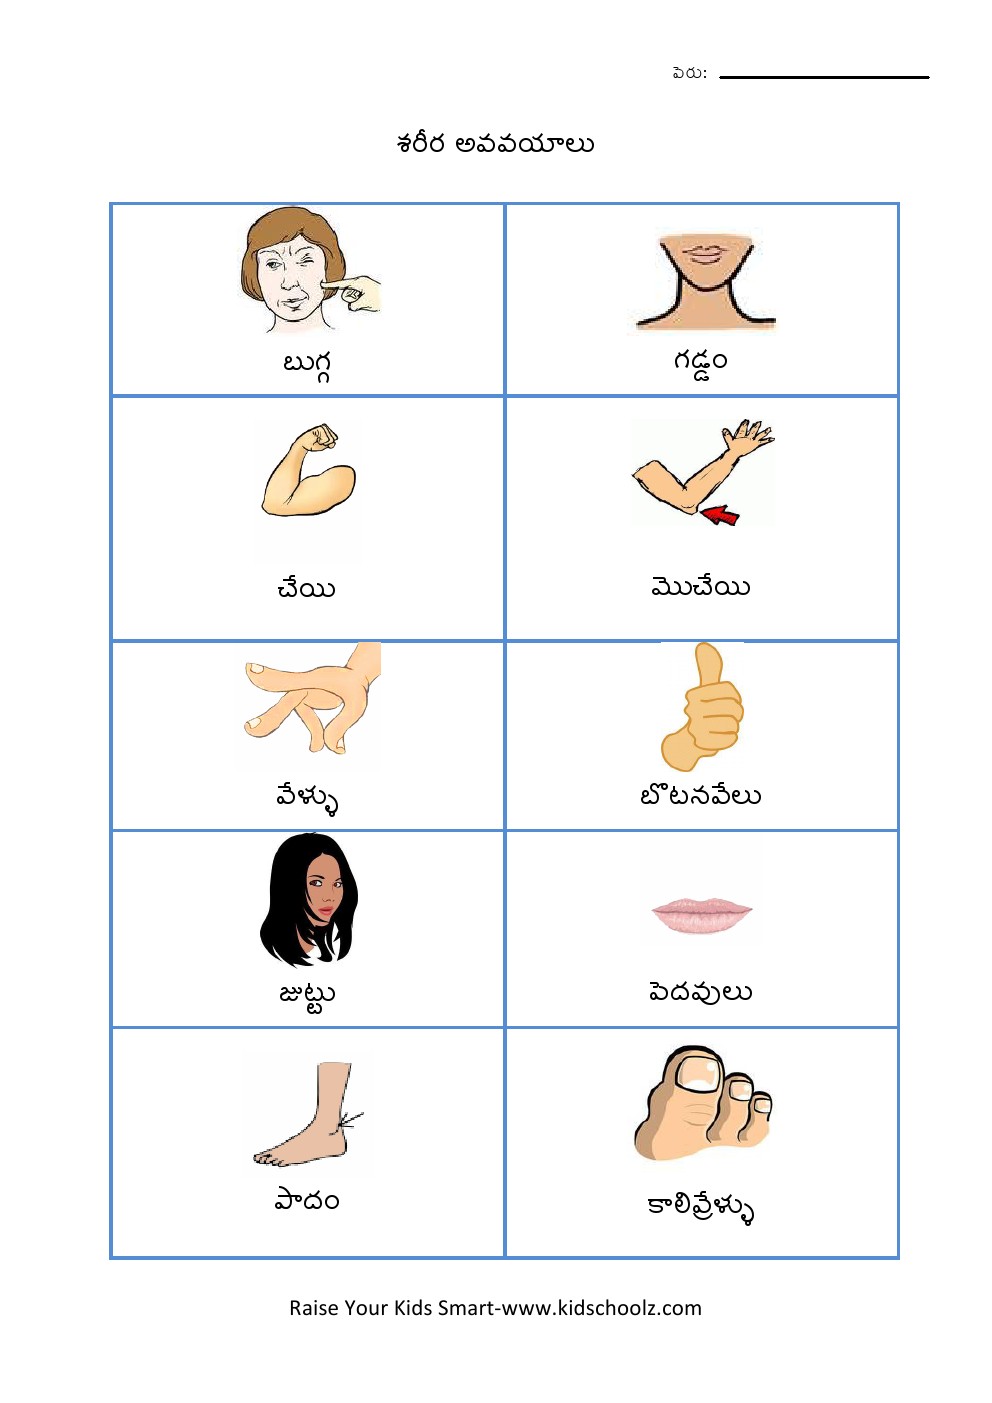 Telugu- Body Parts Worksheet 2 - KidschoolzKidschoolz math worksheets, worksheets, grade worksheets, and free worksheets Body Parts Worksheet For Kindergarten 2 1403 x 992